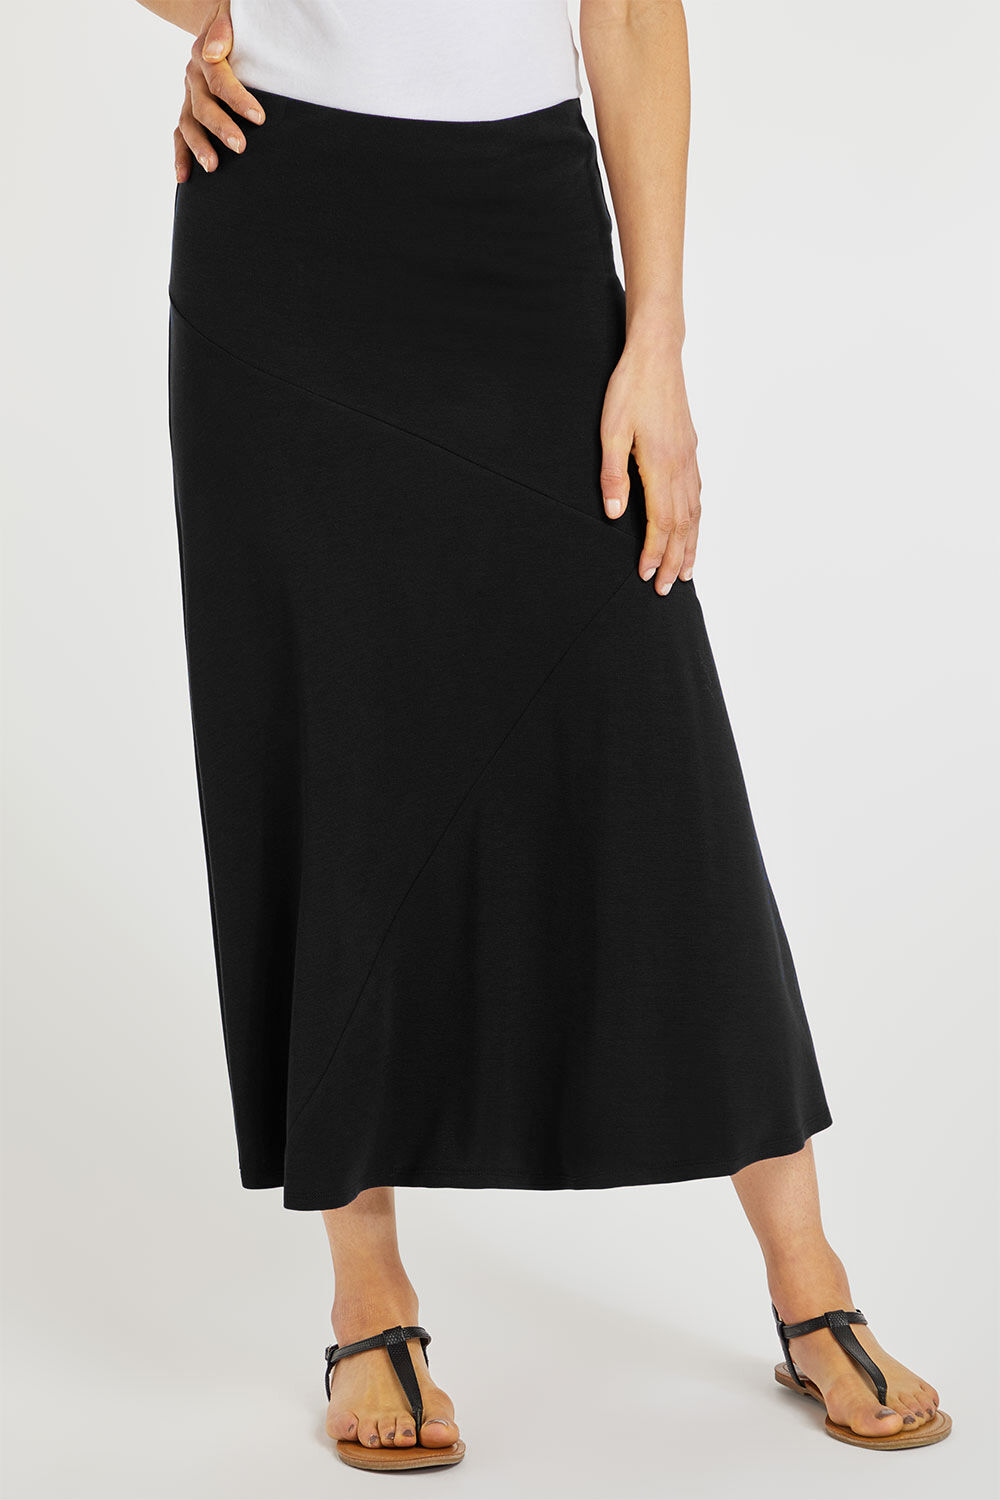 Bonmarche Black Elasticated Panelled Skirt, Size: 16